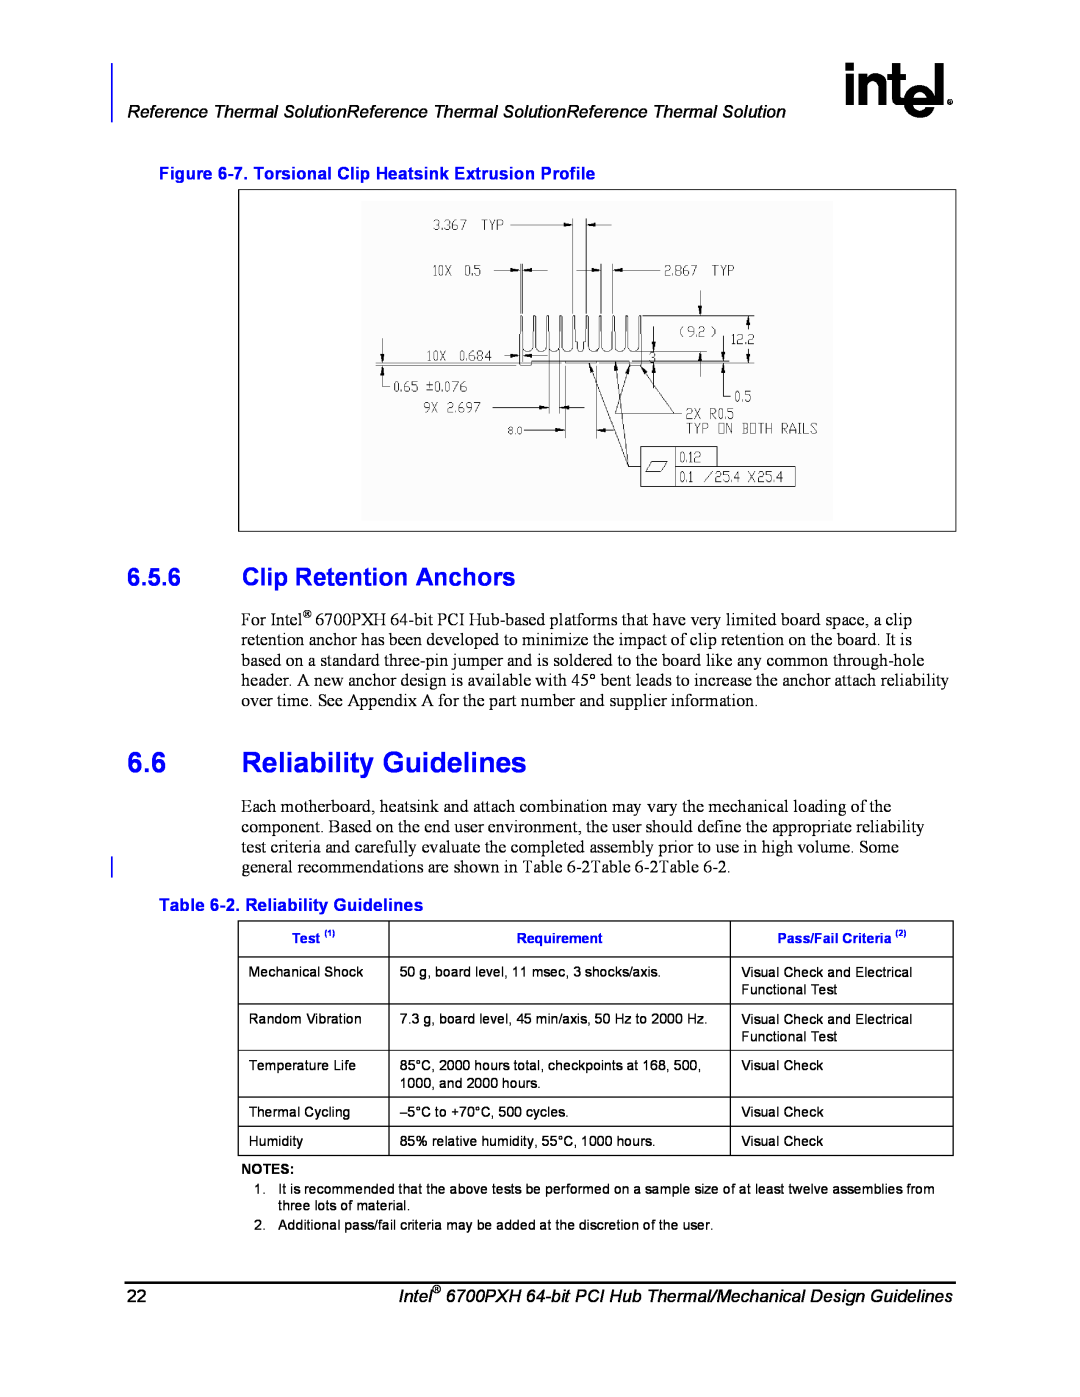 Intel 6700PXH manual Reliability Guidelines, Clip Retention Anchors, 7. Torsional Clip Heatsink Extrusion Profile 